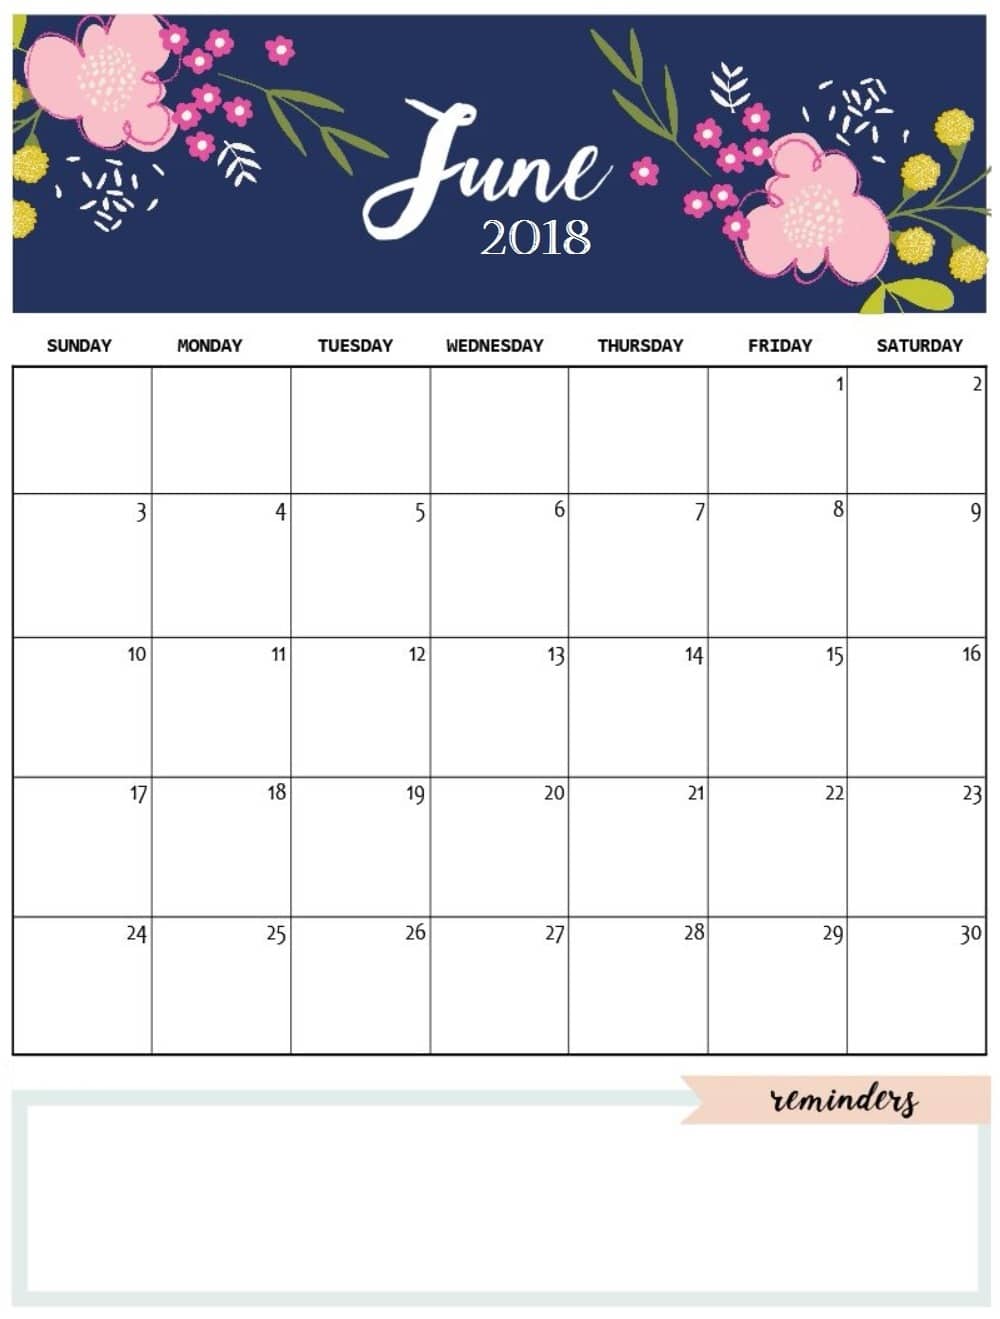 free-calendar-june-2018-type-and-graphics-lab-calendar-june-free